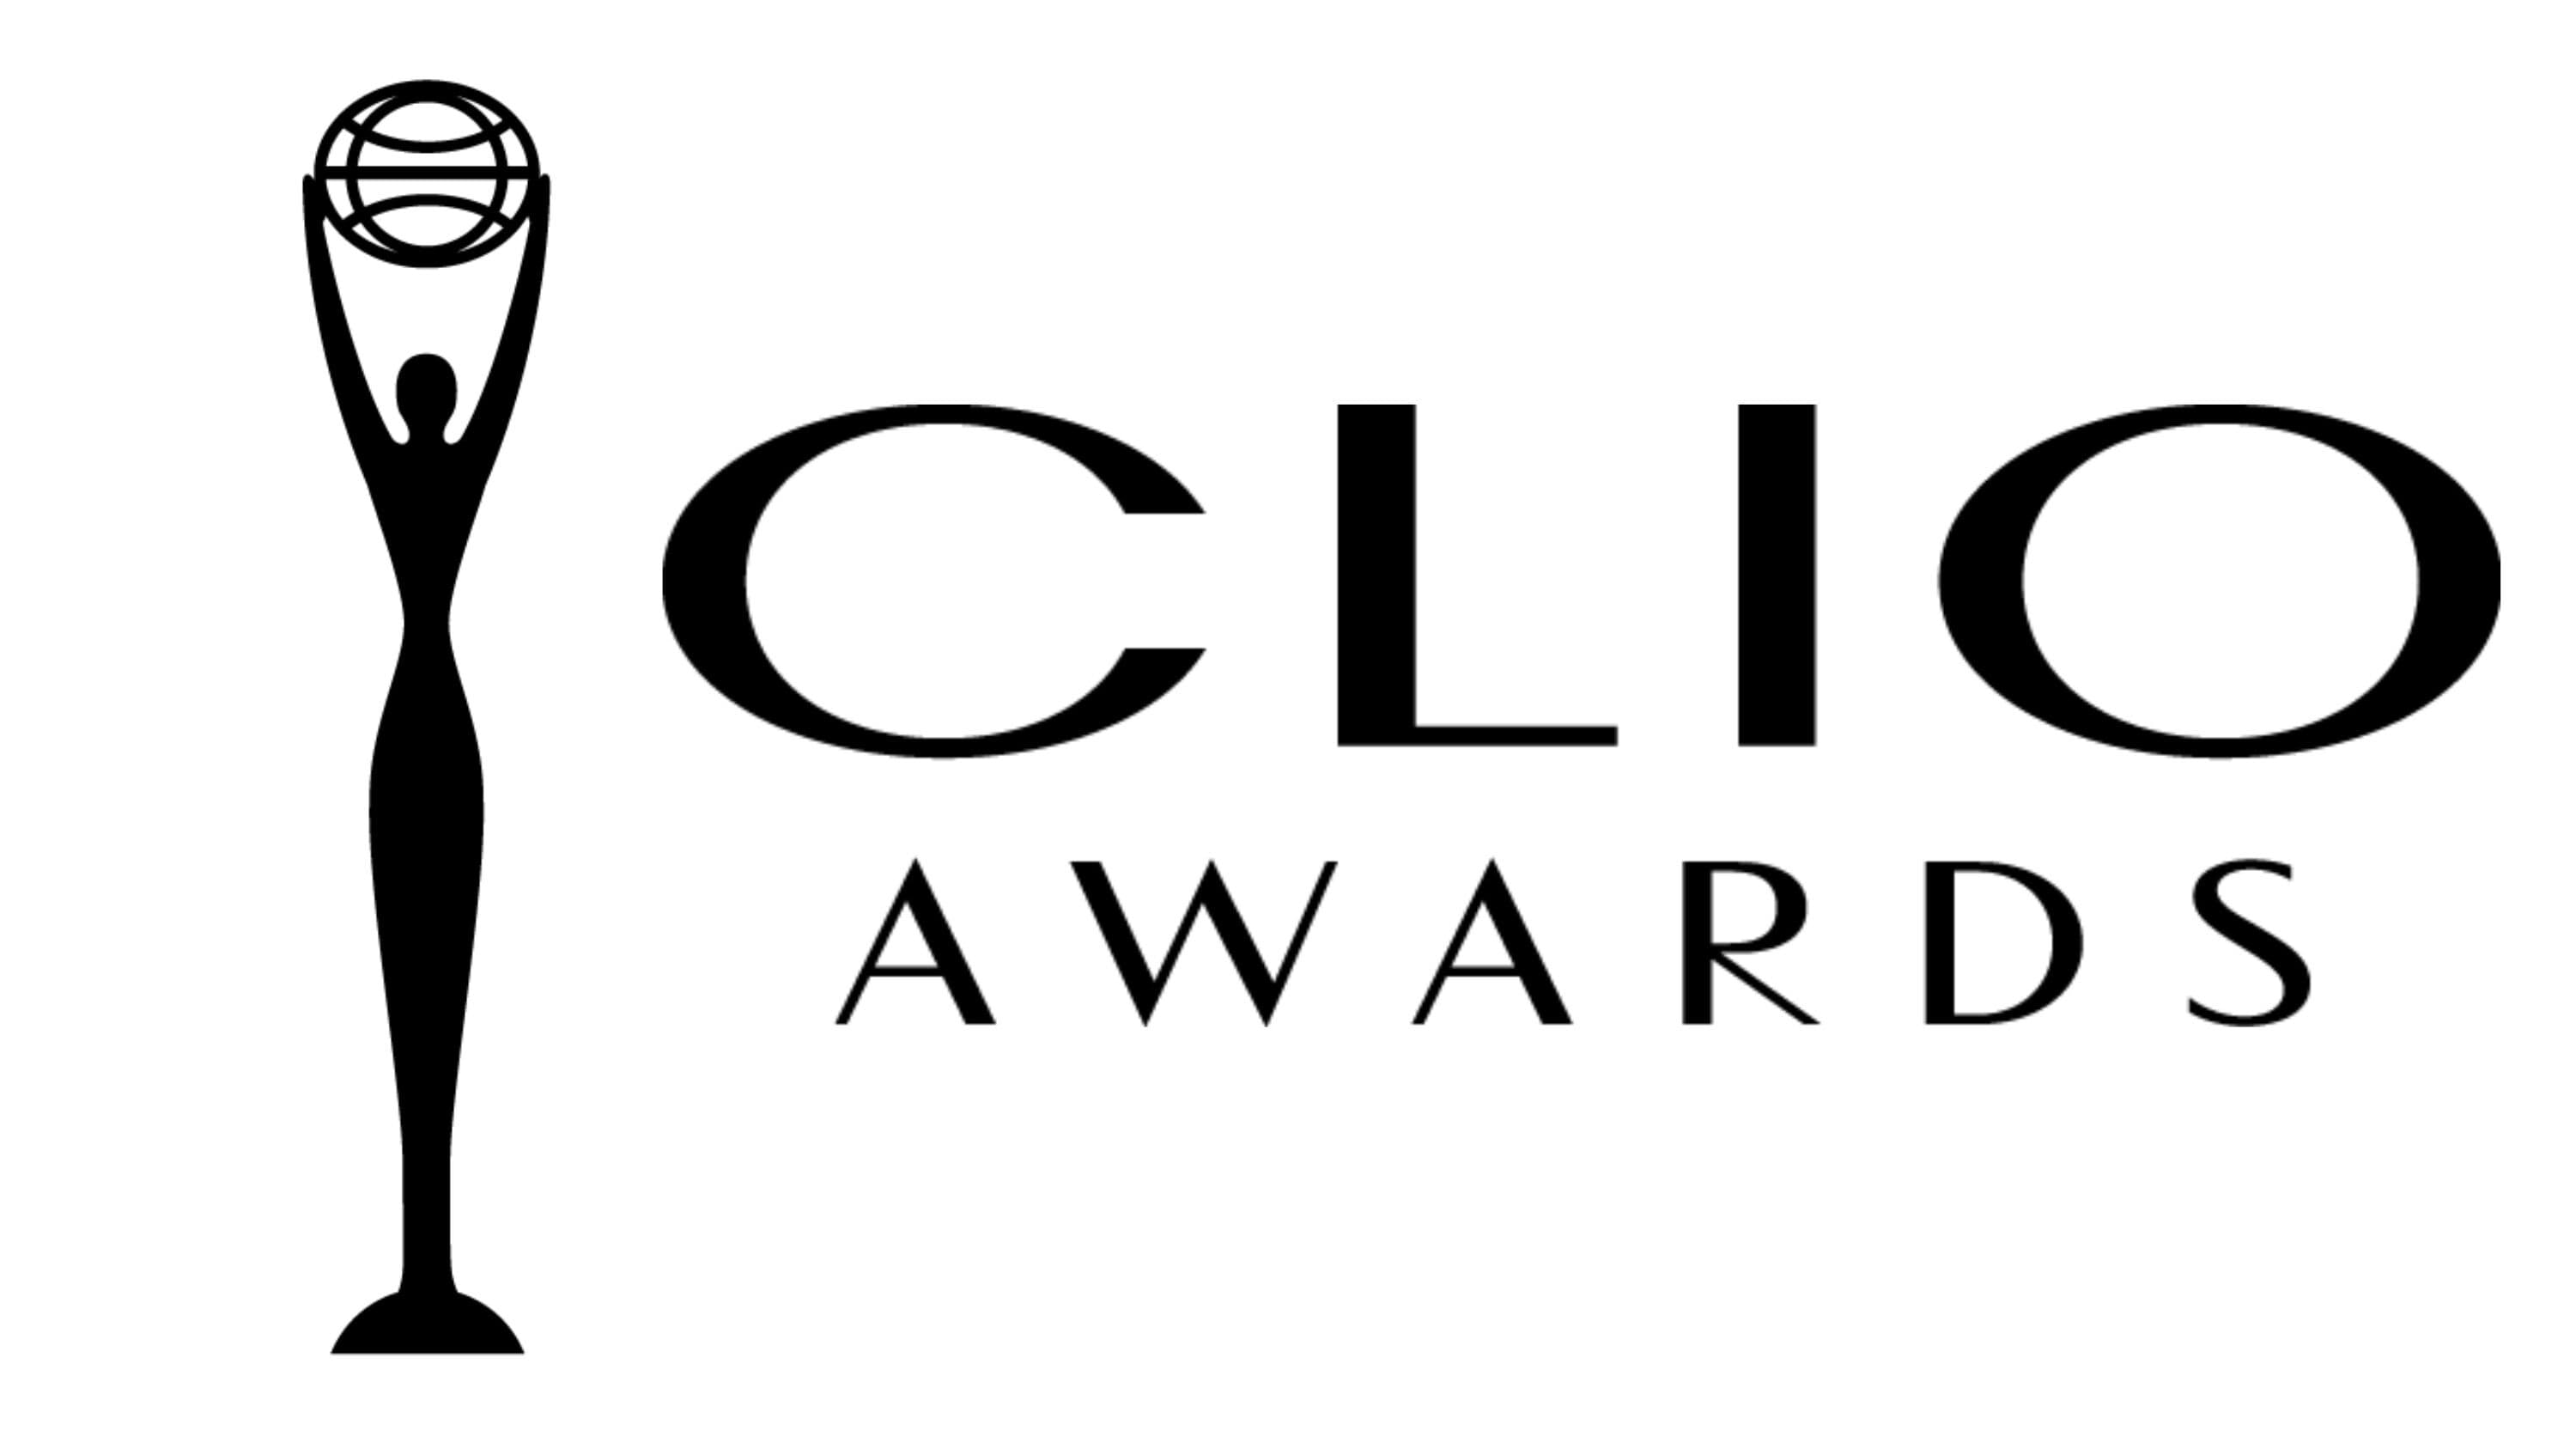 Clio Awards Winners